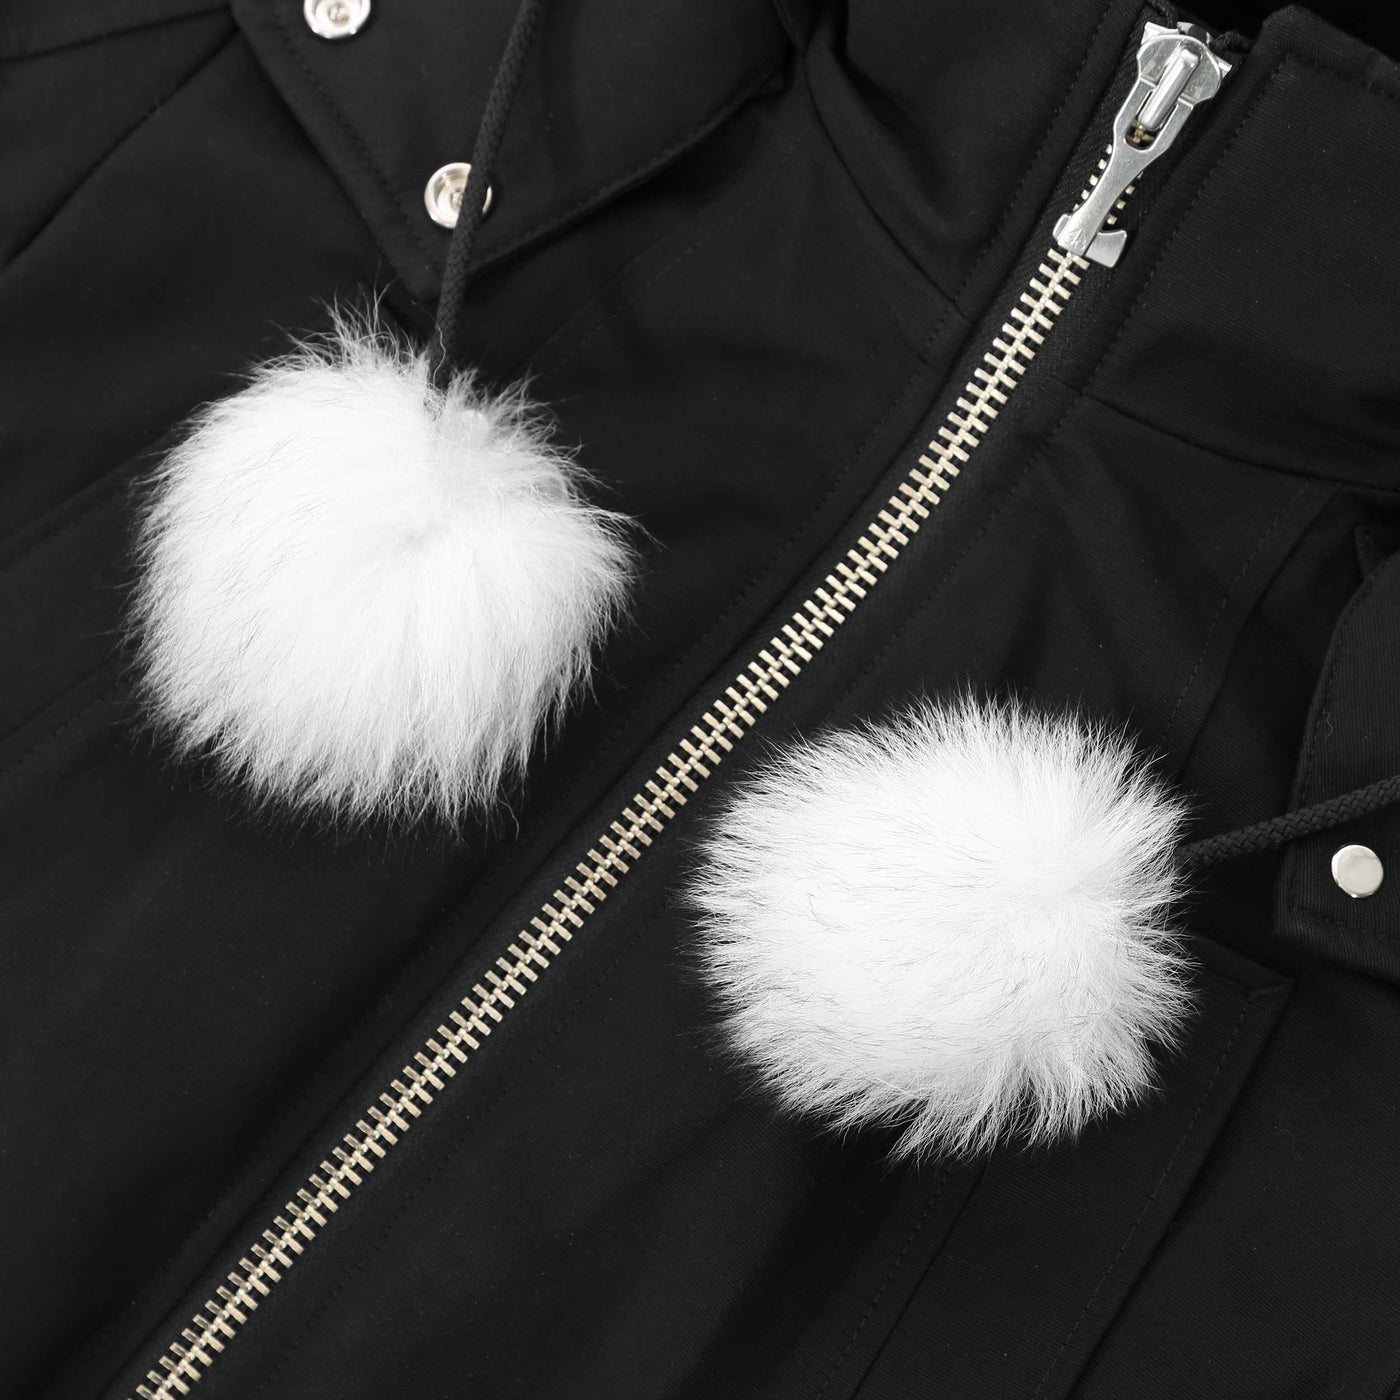 Moose Knuckles Debbie Ladies Bomber Jacket in Black with White Fur Poms Poms